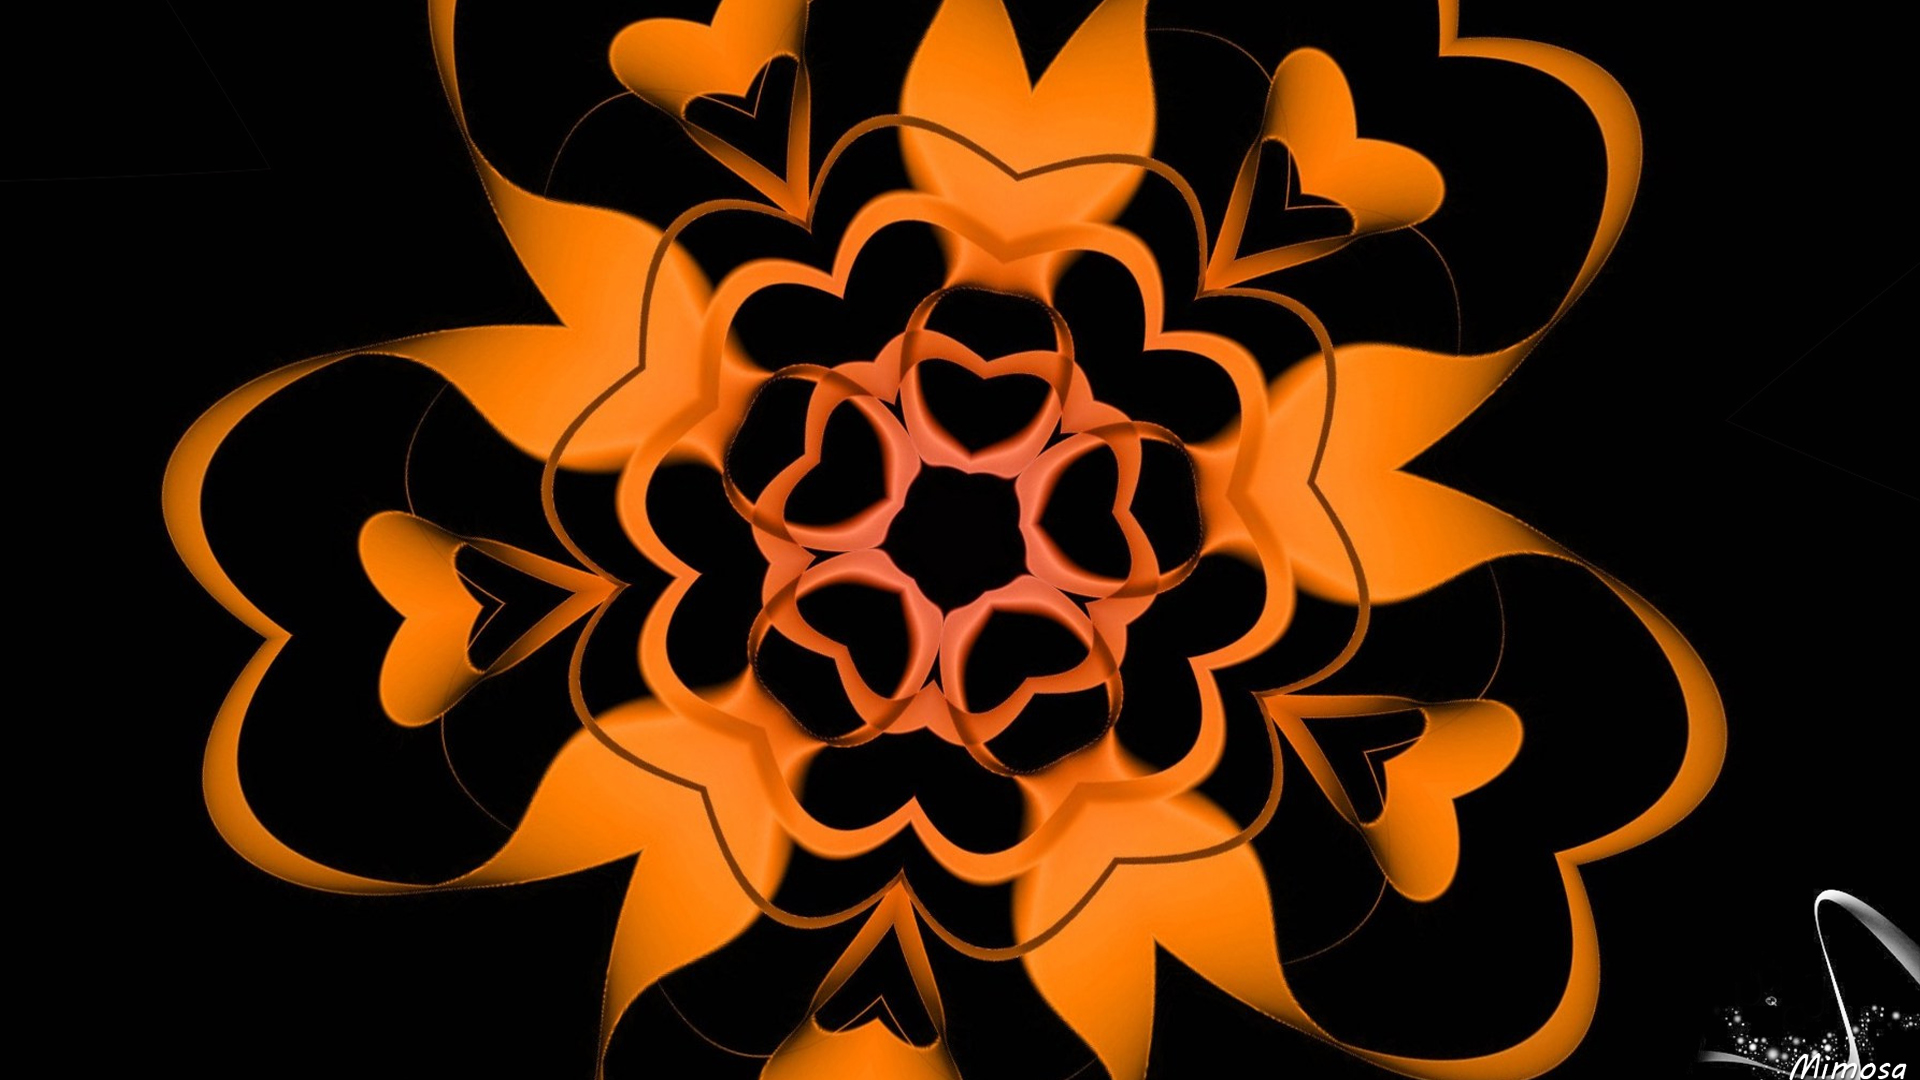 Abstract Artistic Digital Art Kaleidoscope Orange Color 1920x1080